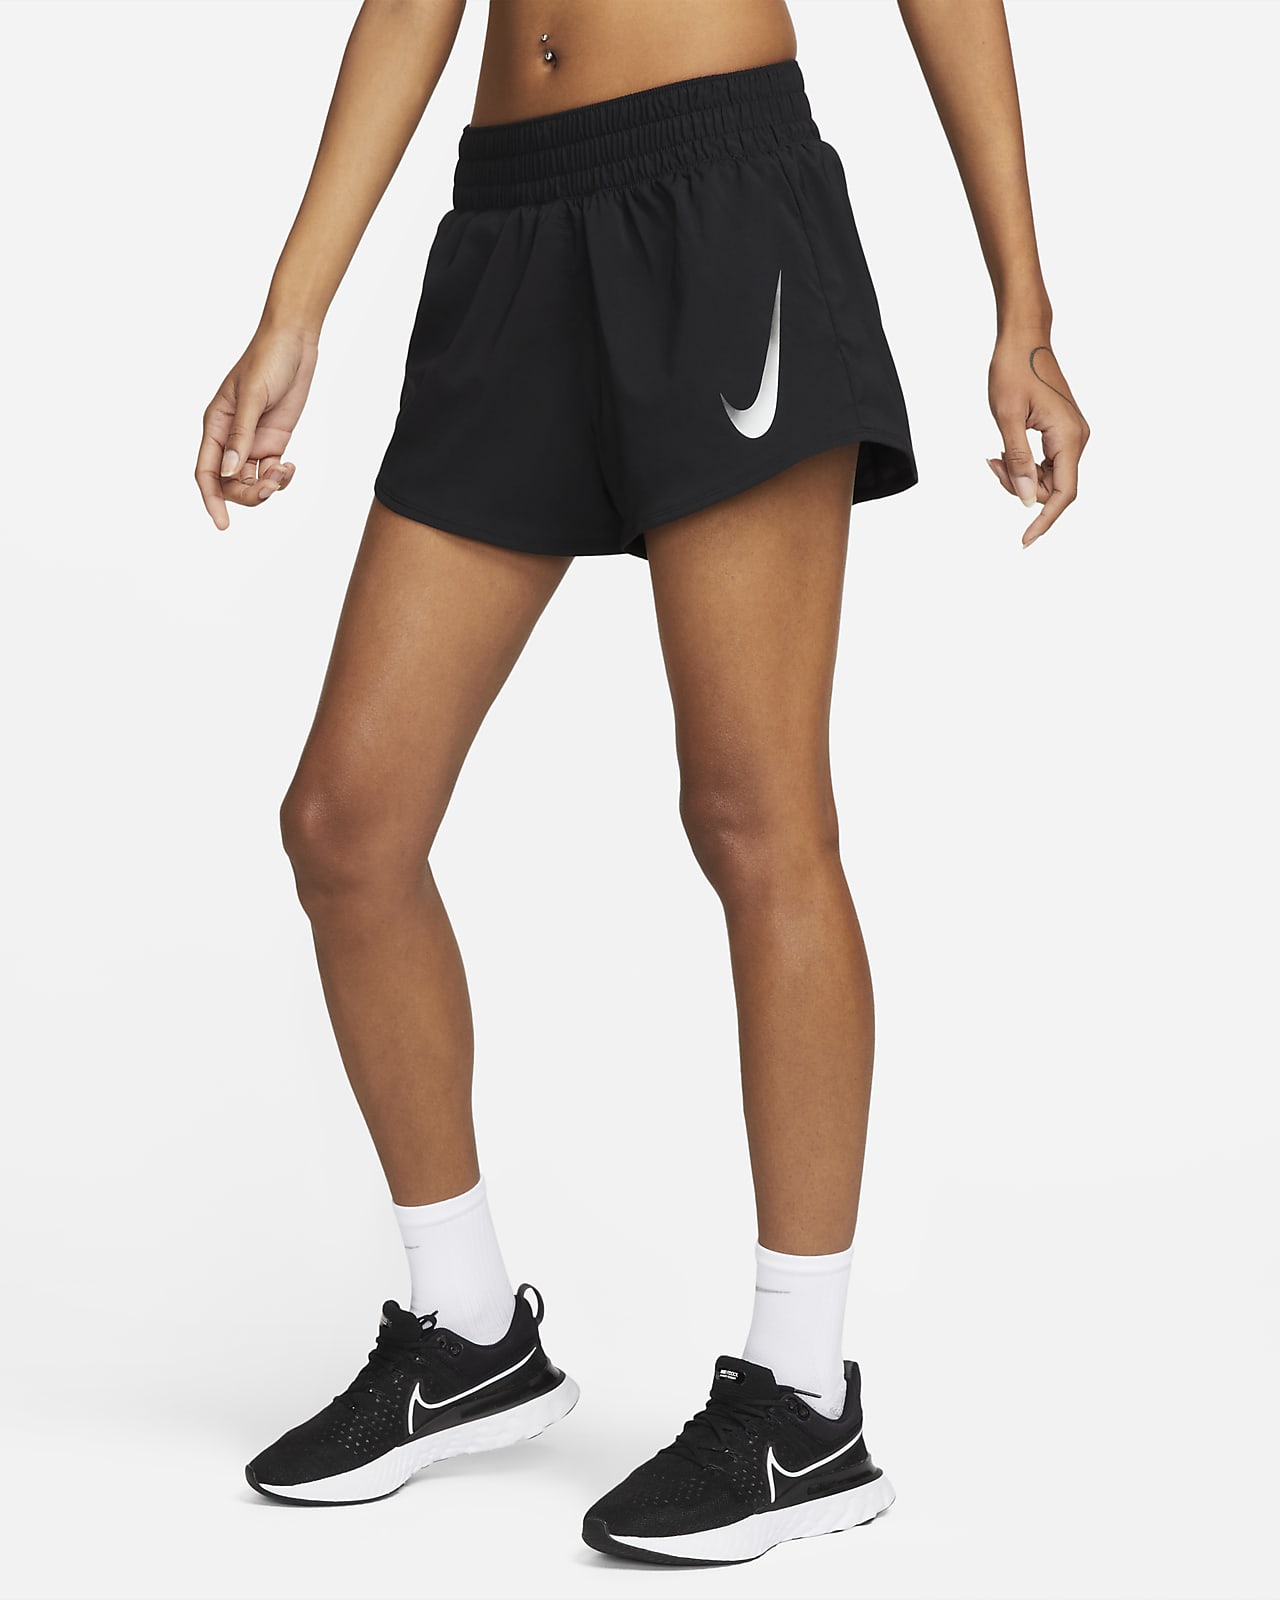 Morse code koepel aantrekkelijk Nike Swoosh Hardloopshorts met binnenbroek voor dames. Nike BE